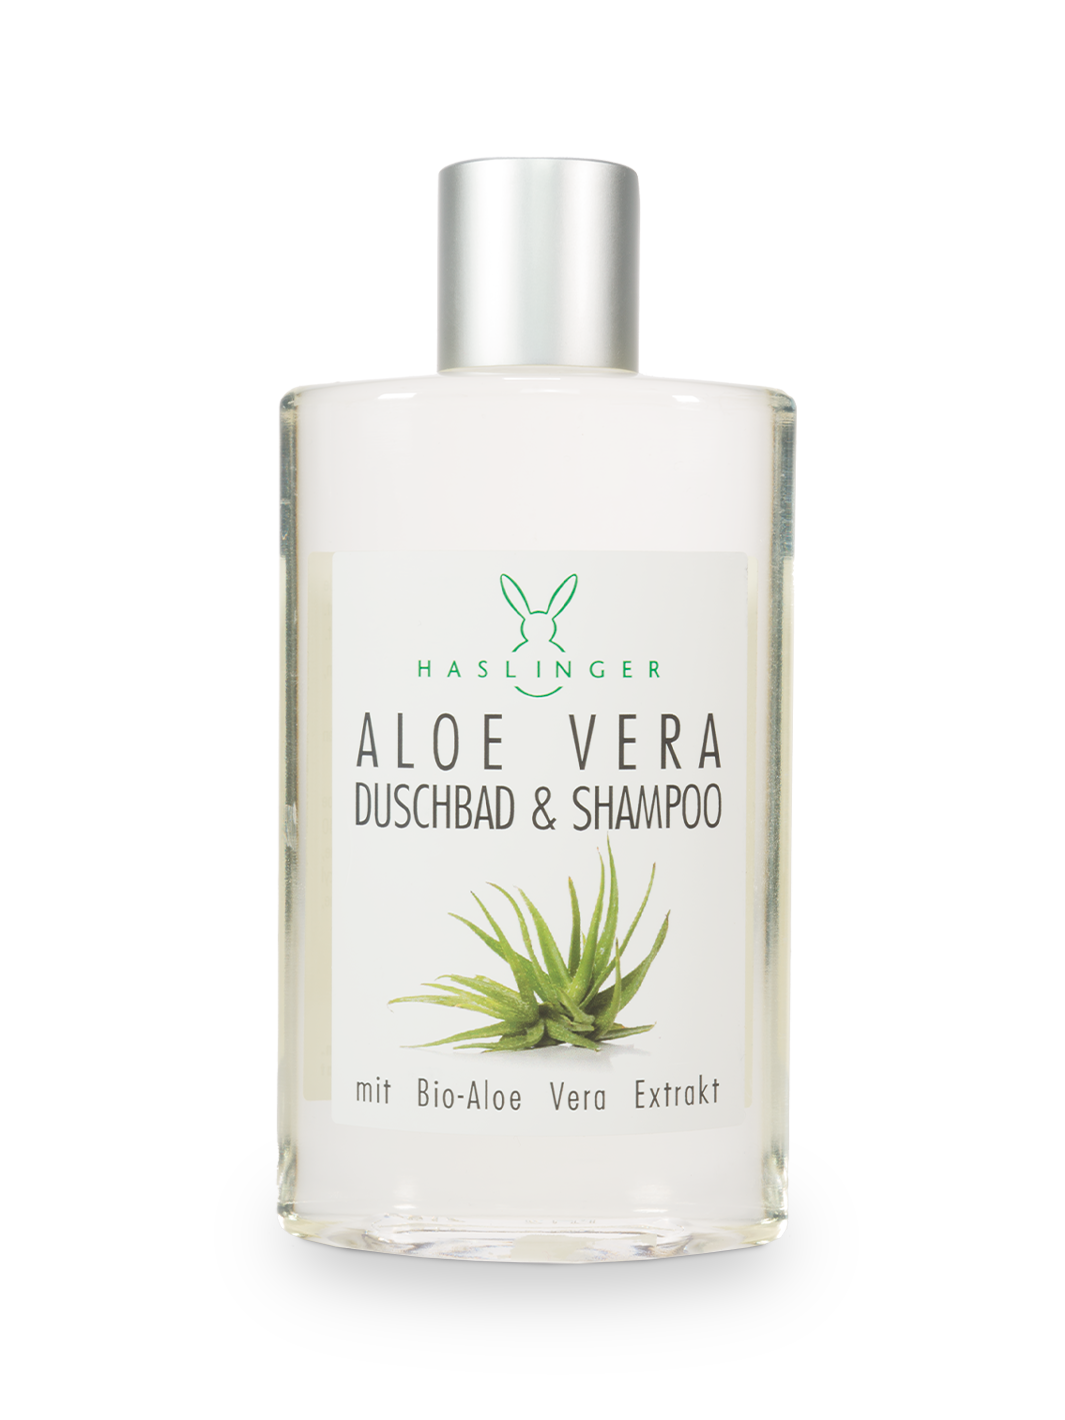 Haslinger Aloe Vera Duschbad & Shampoo 200ml